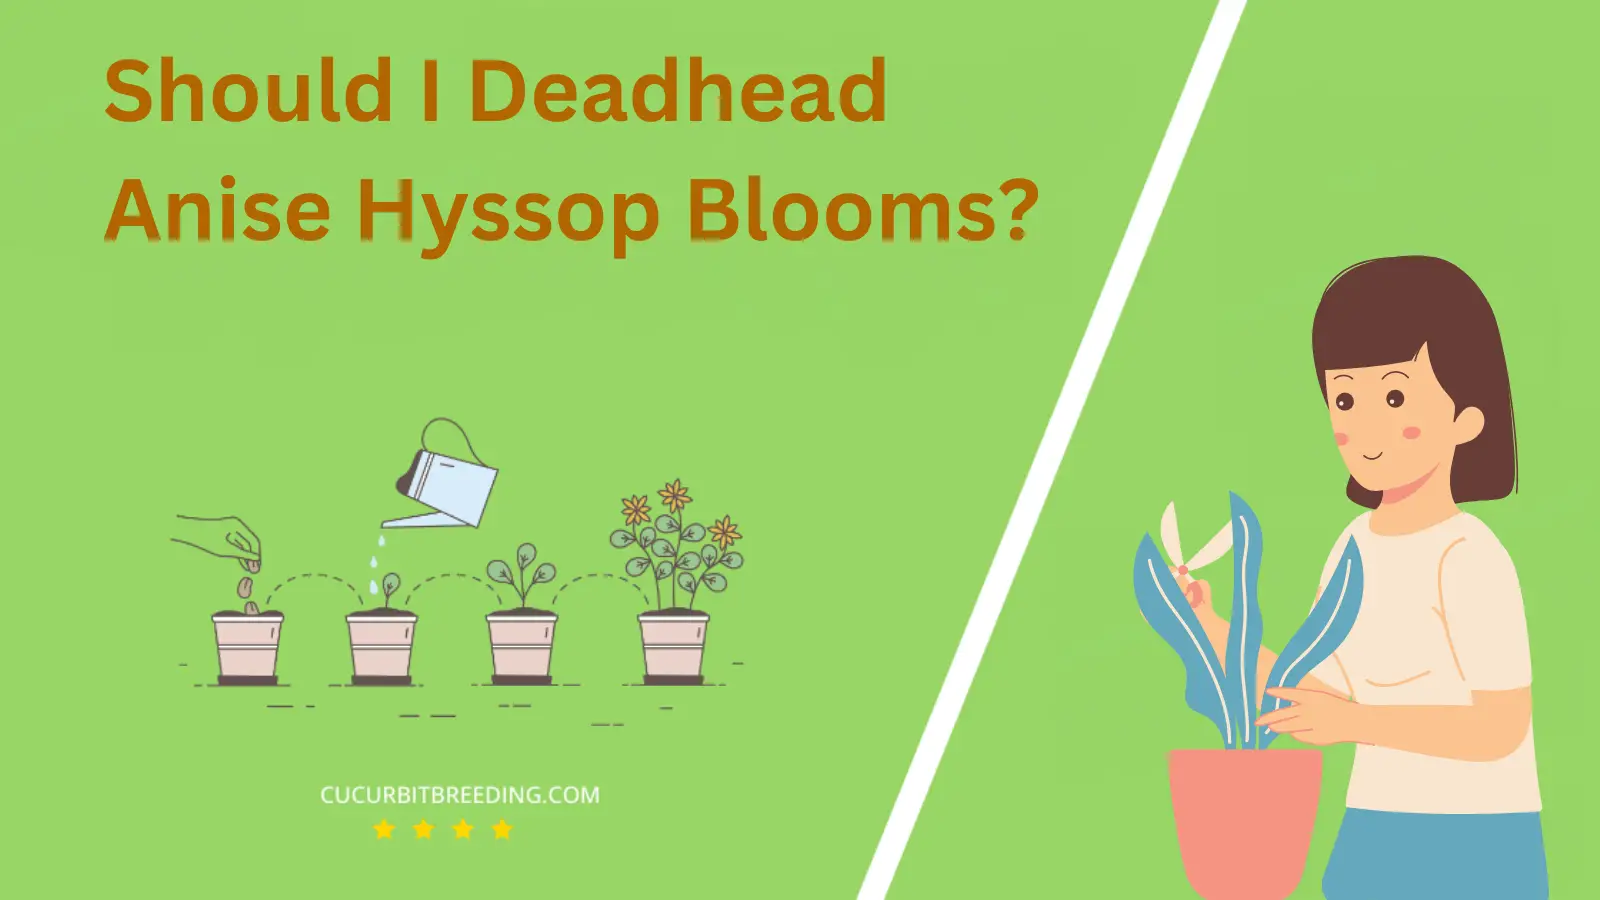 Should I Deadhead Anise Hyssop Blooms?